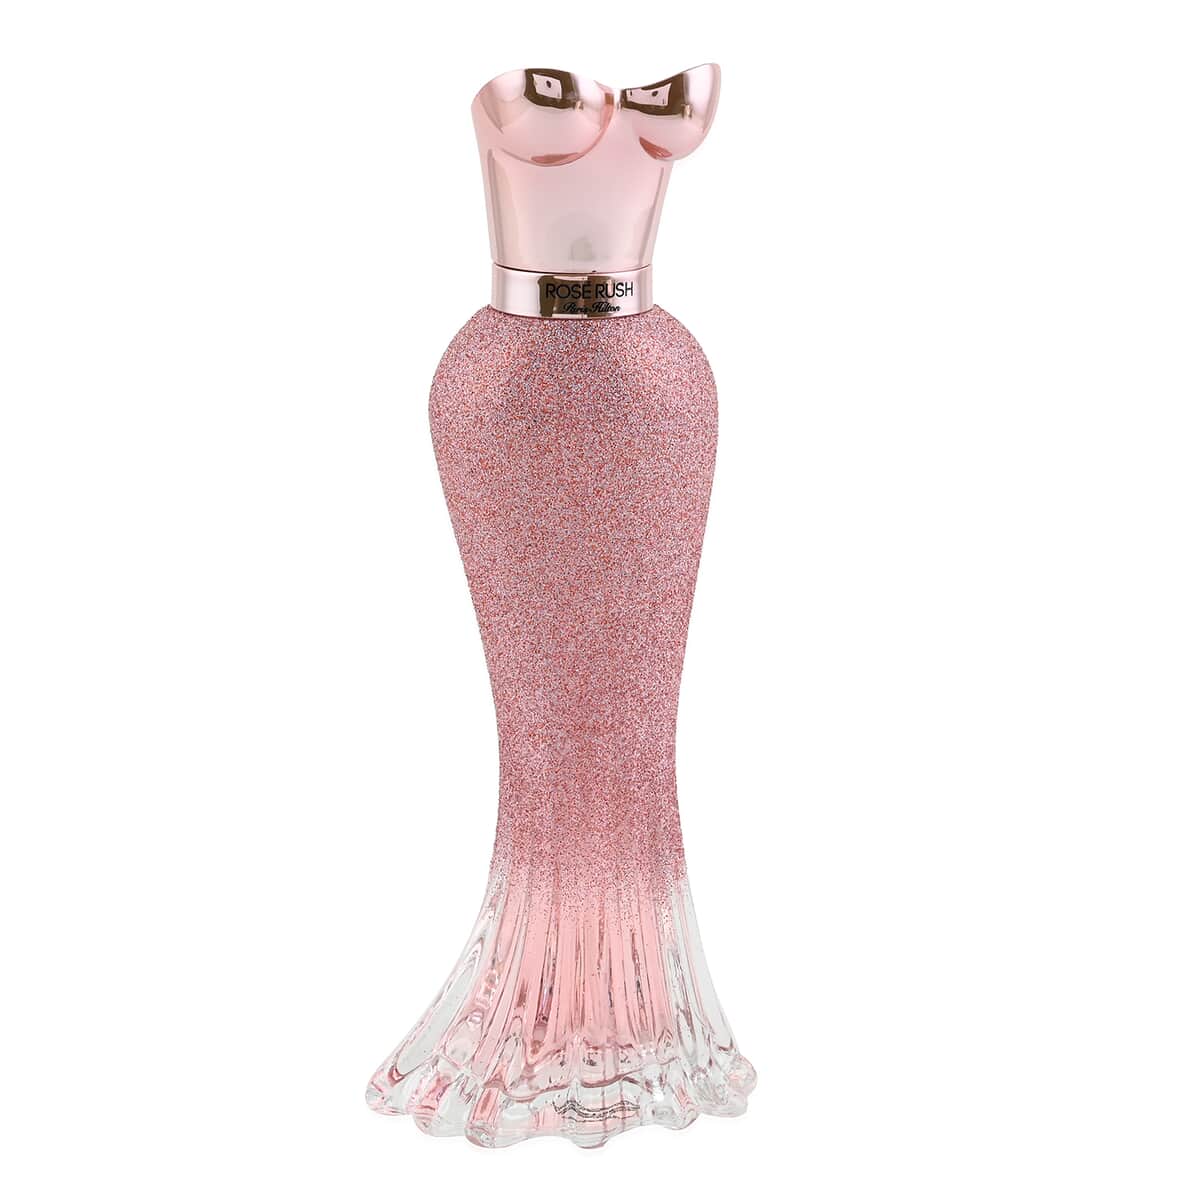 PARIS HILTON ROSE RUSH Eau De Parfum Spray 3.4 oz, Romantic Rose and Amber Scent image number 0